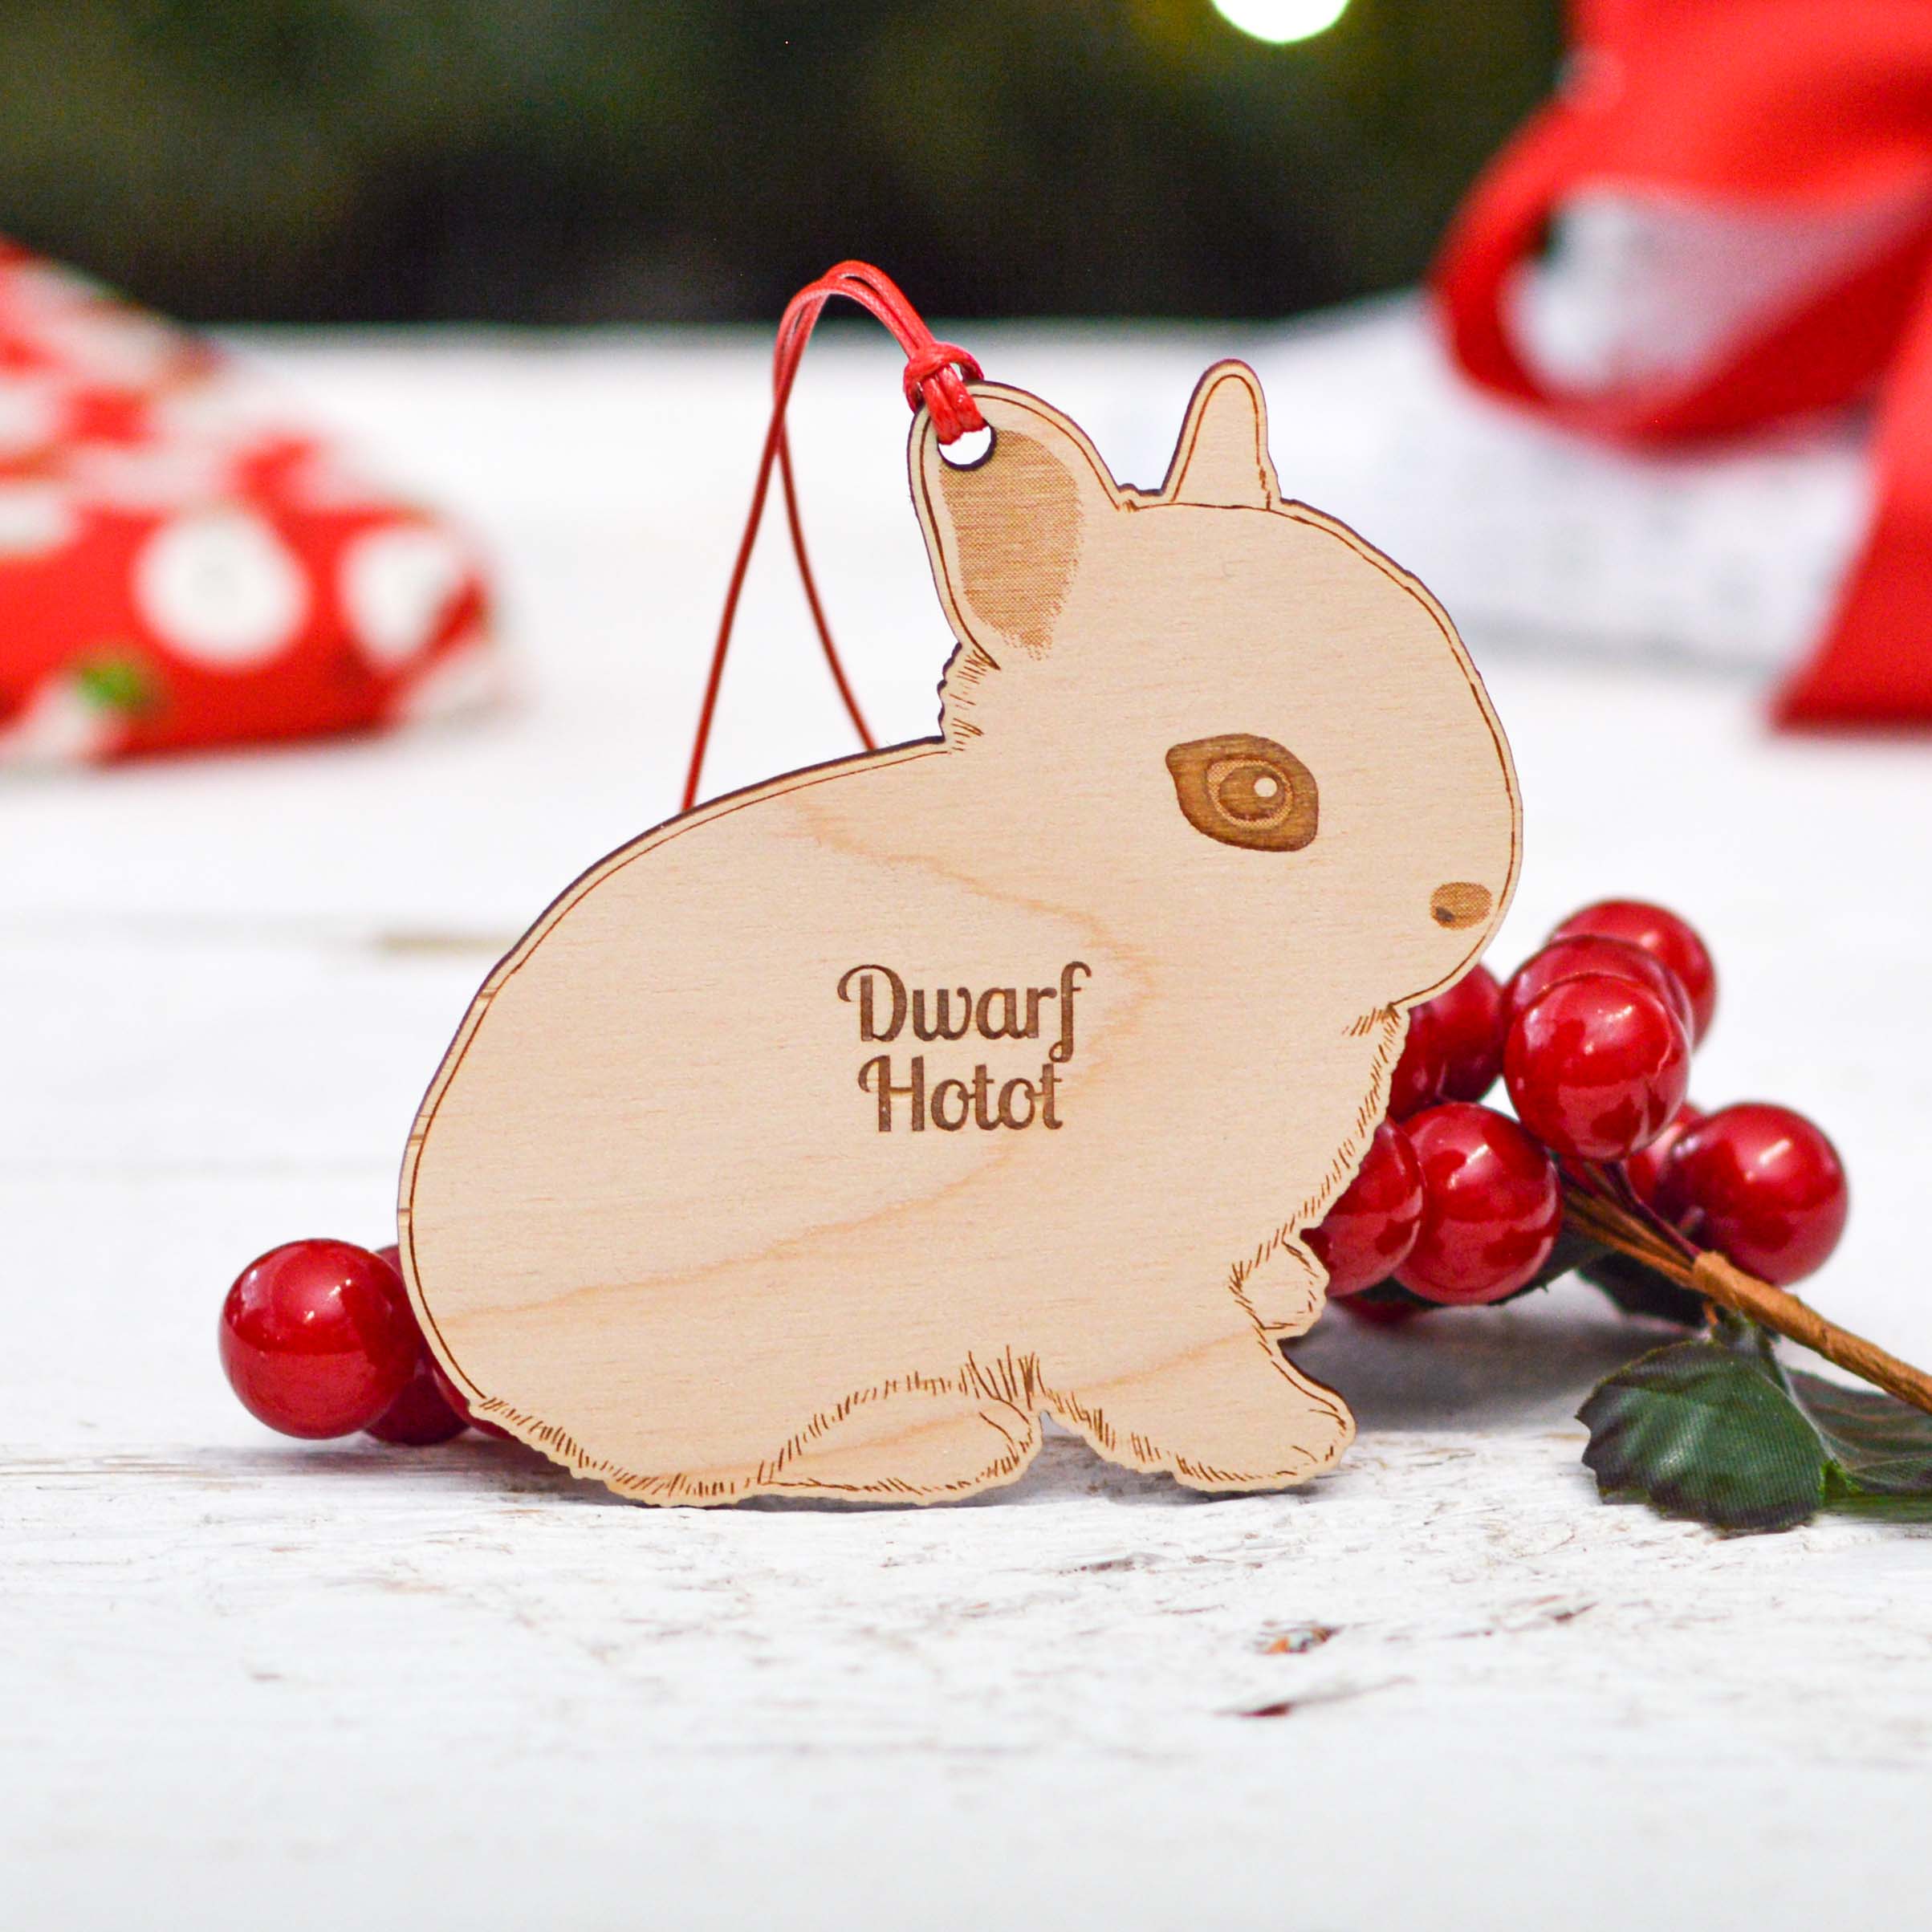 Personalised Dwarf Hotot Rabbit Decoration